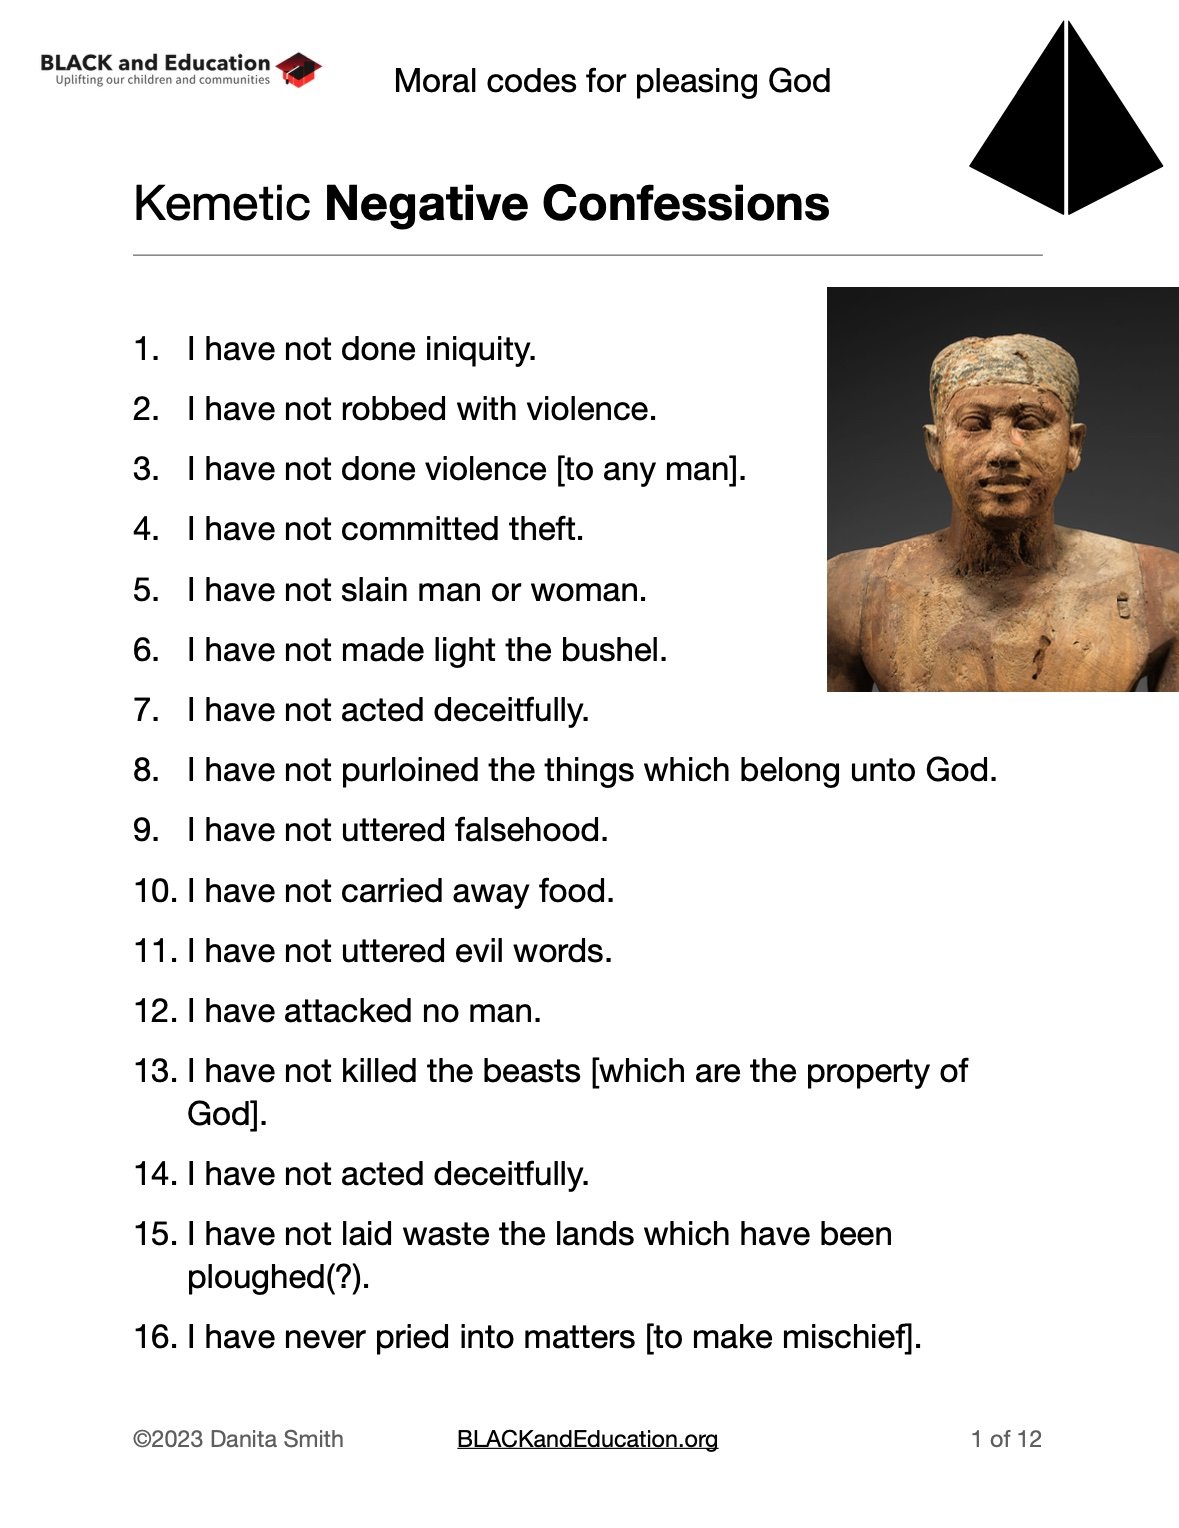 42 Negative Confessions